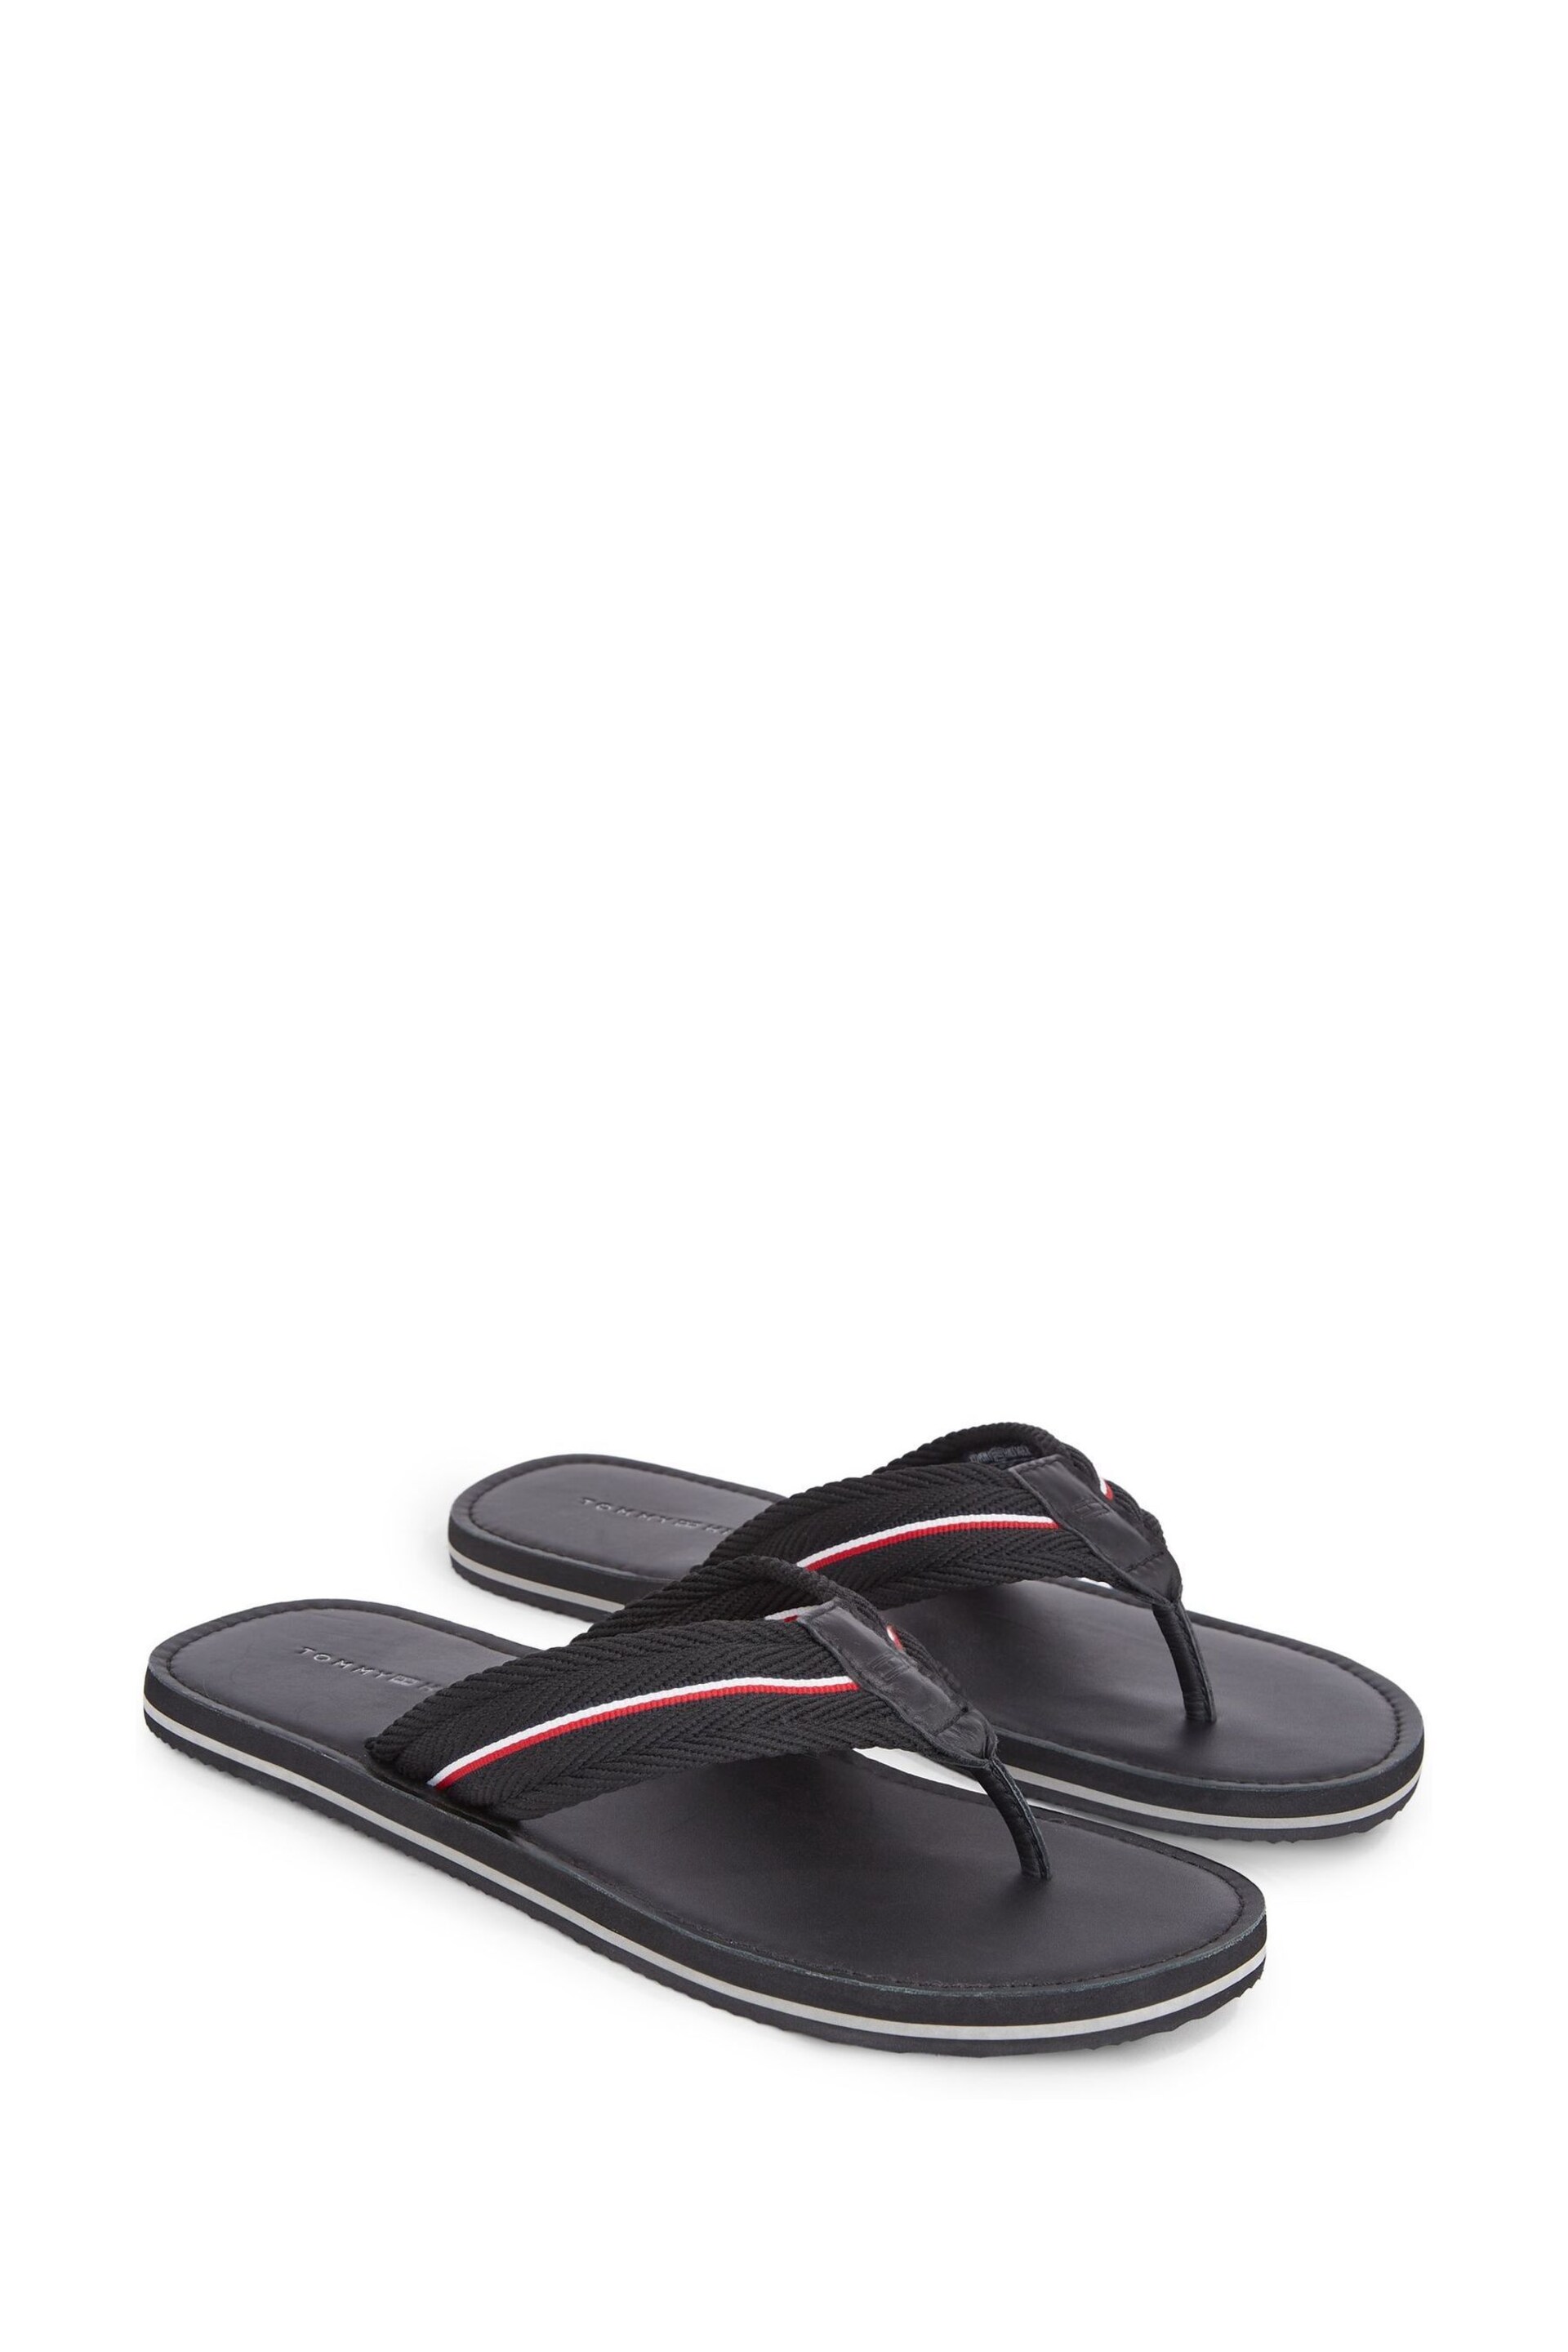 Tommy Hilfiger Hilfiger Leather Beach Black Sandals - Image 1 of 4